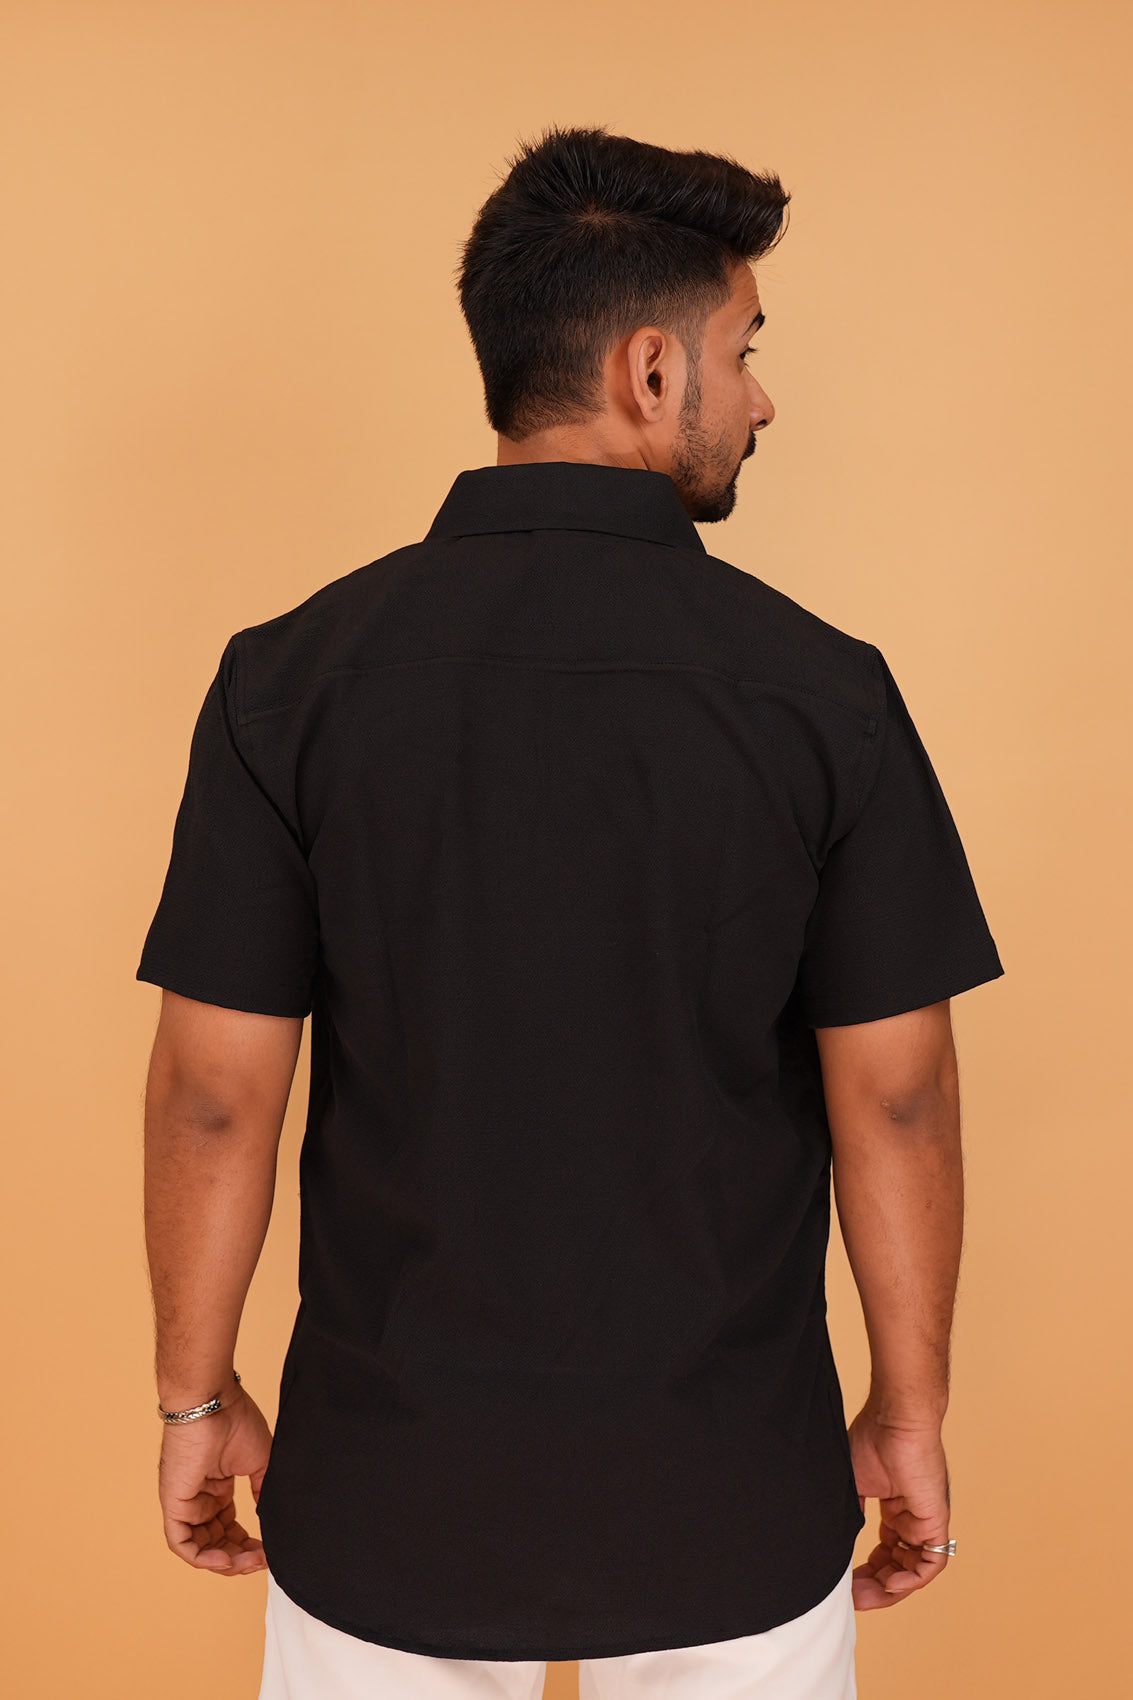 Pitch Black Half-Sleeve Shirt